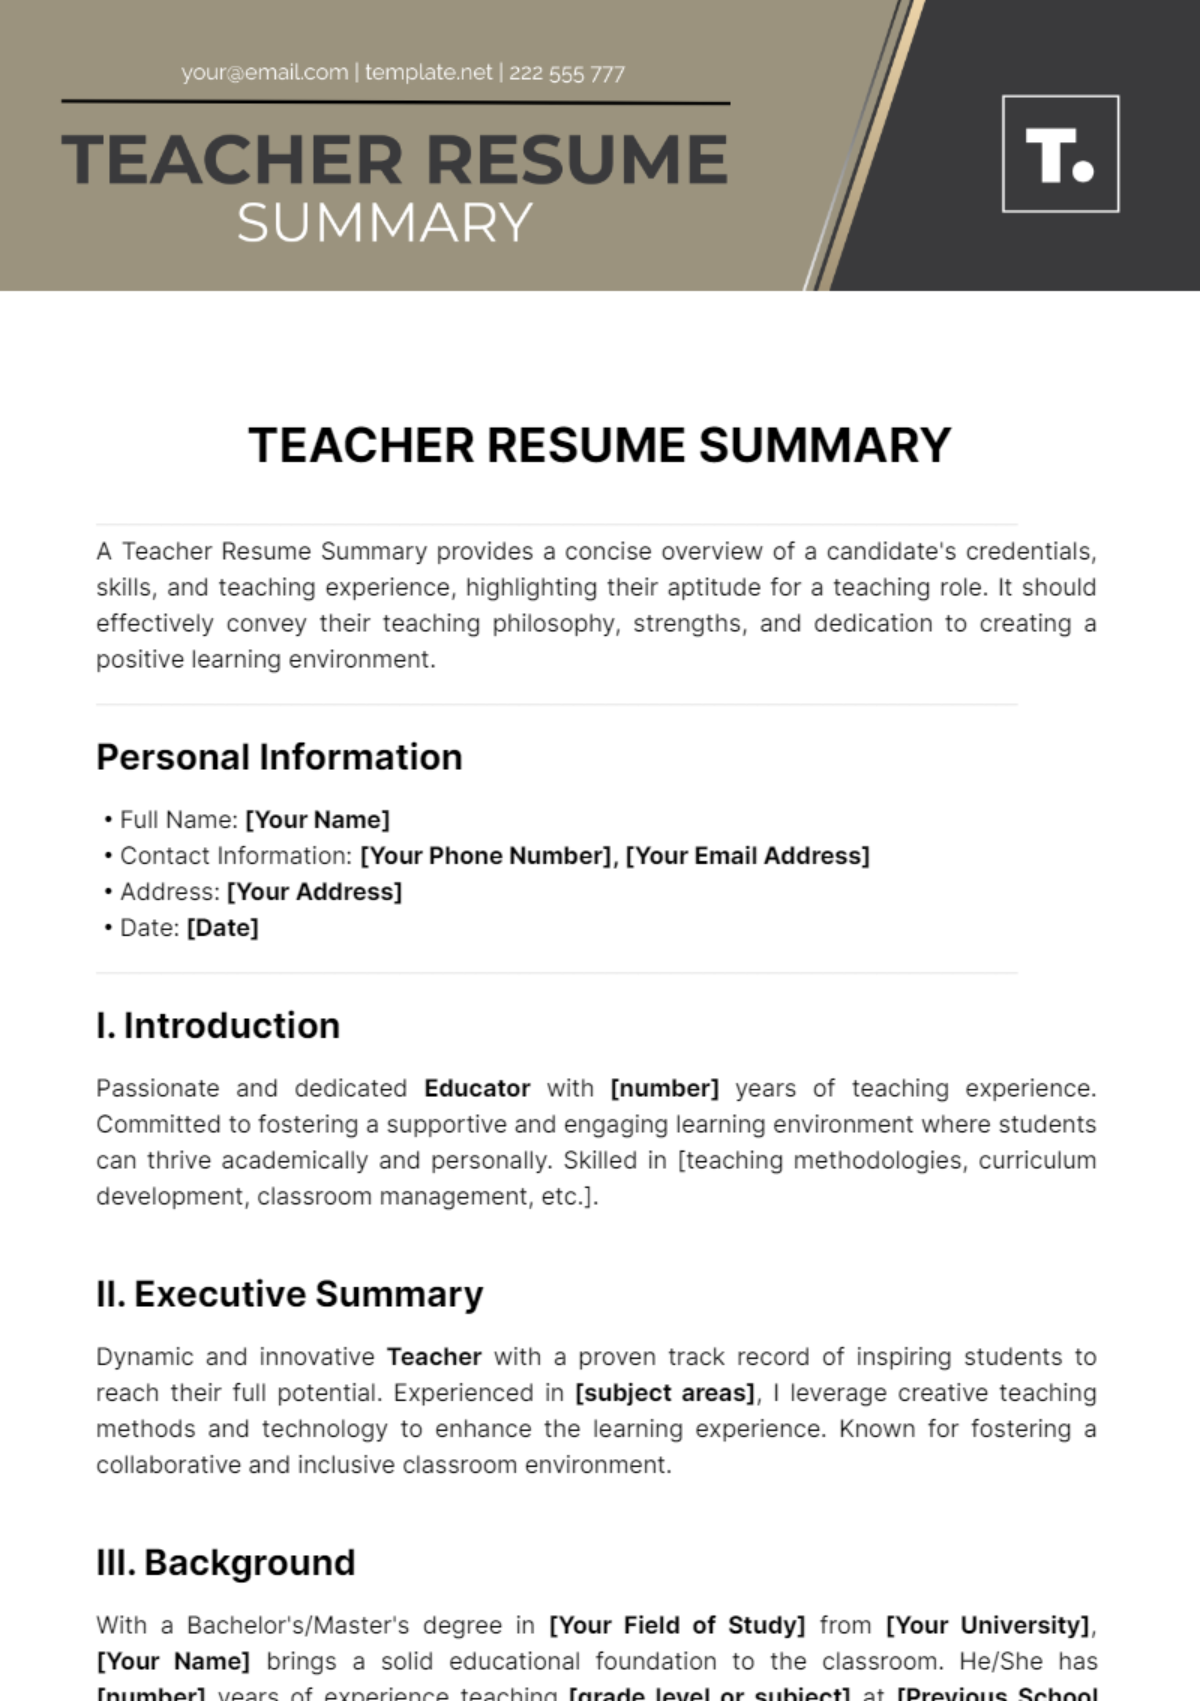 Teacher Resume Summary Template